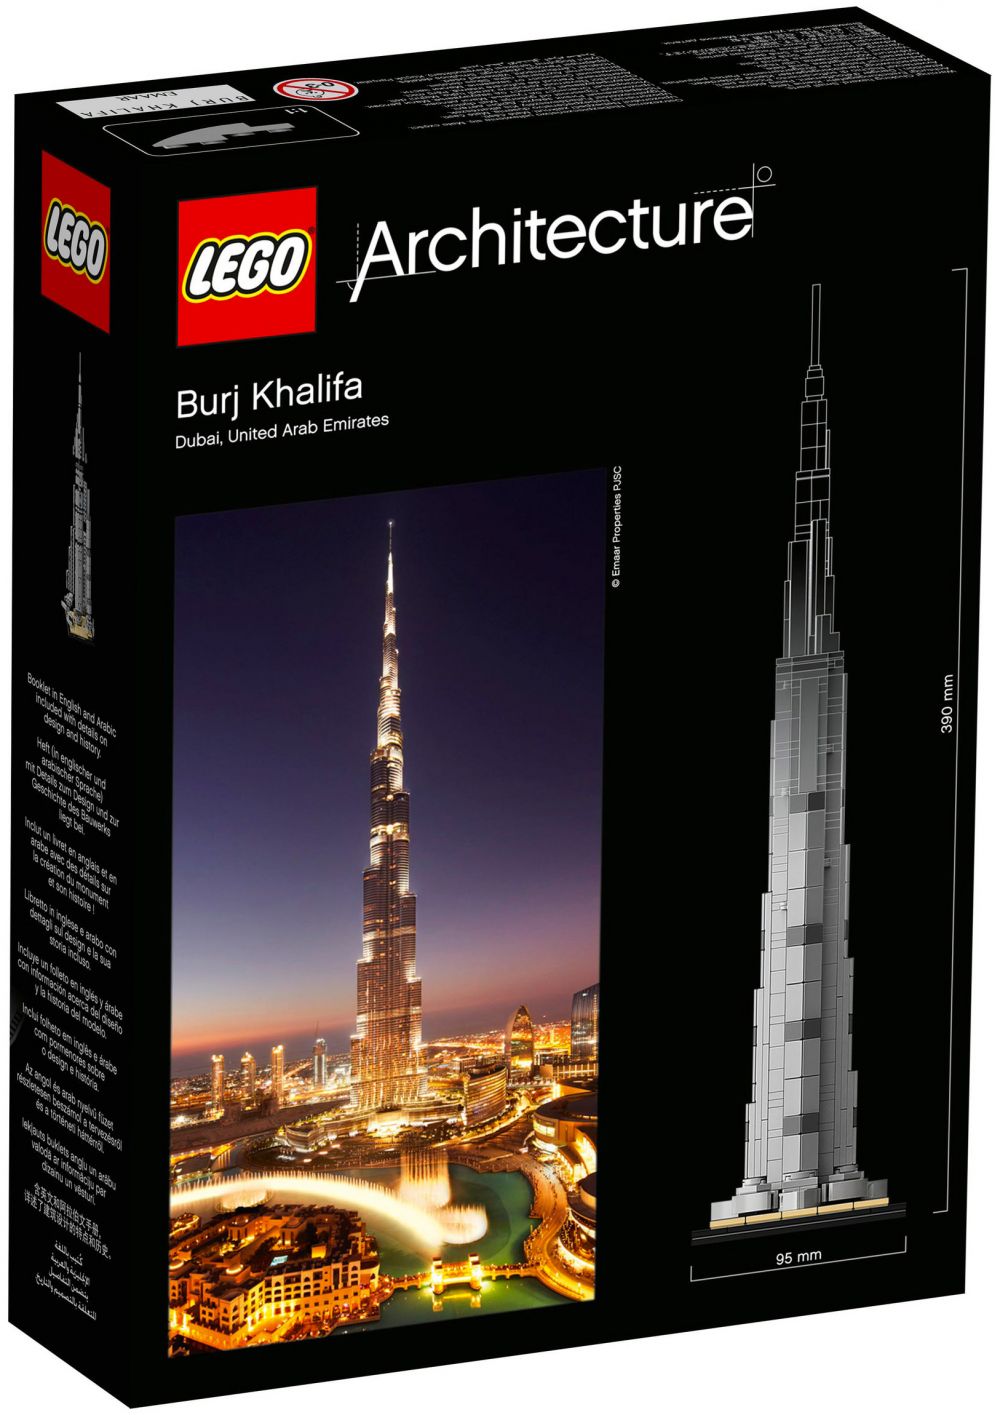 LEGO Architecture 21055 pas cher, Burj Khalifa, Dubai, Emirats Arabes Unis